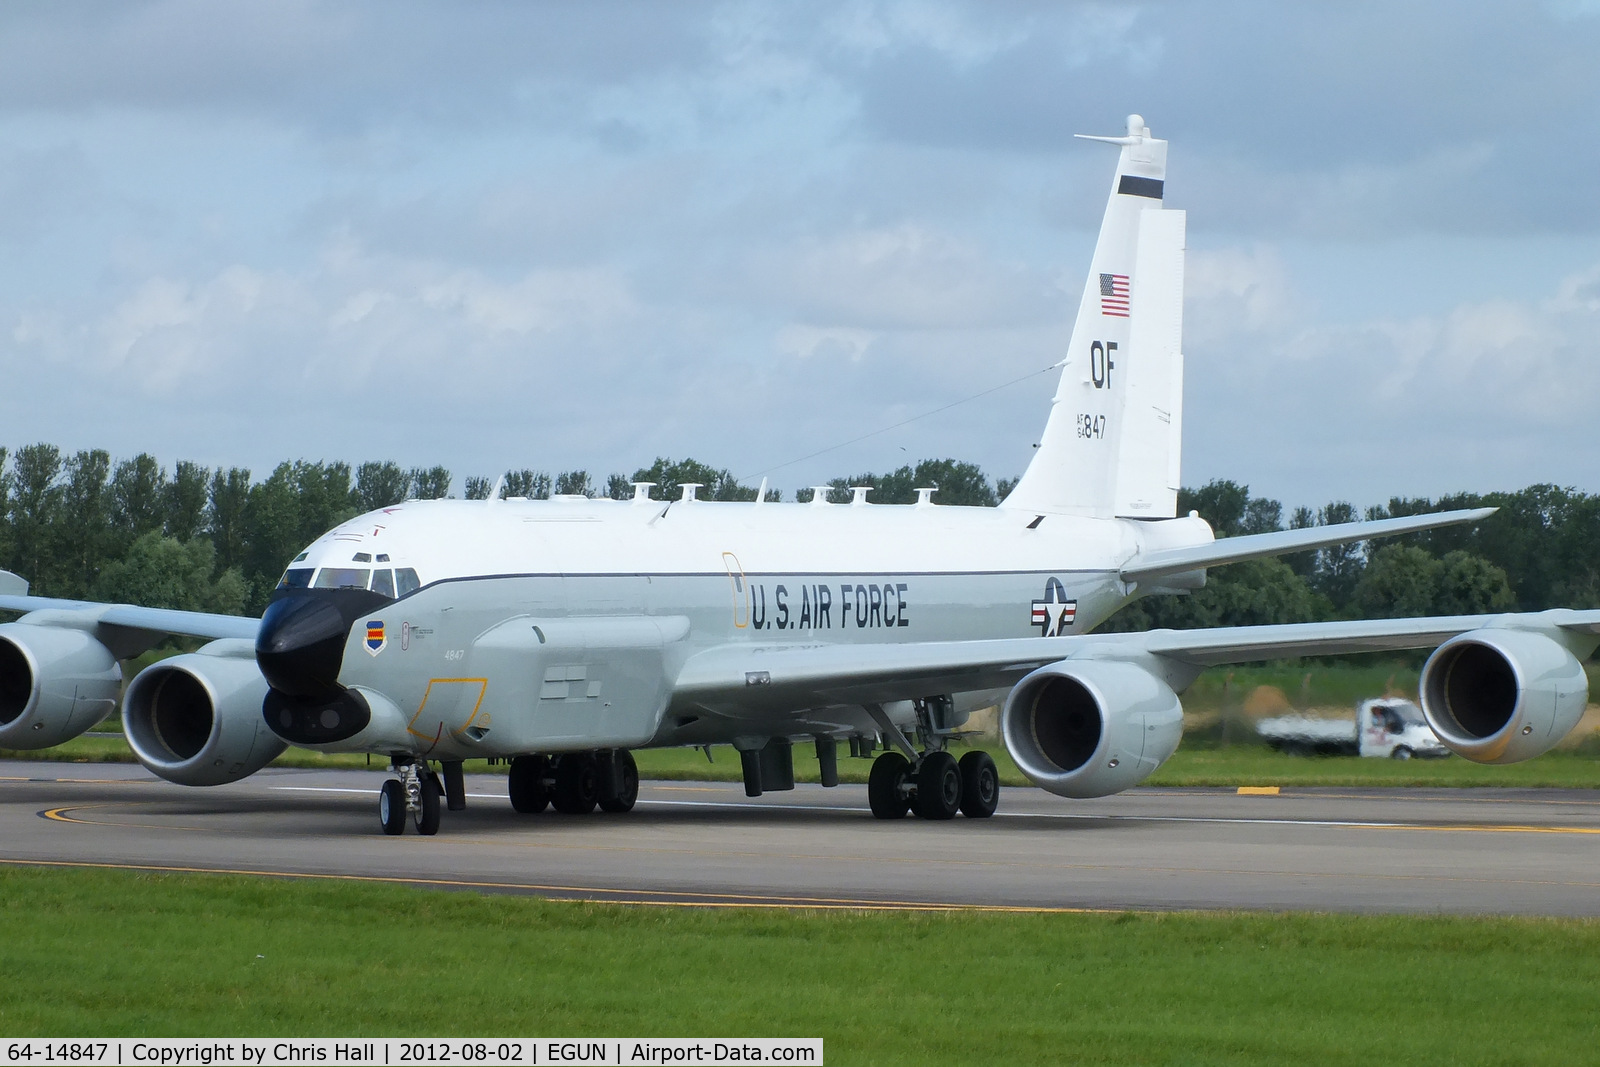 64-14847, 1964 Boeing RC-135U Combat Sent C/N 18747, 55th Operations Group based at Offutt Air Force Base, Nebraska